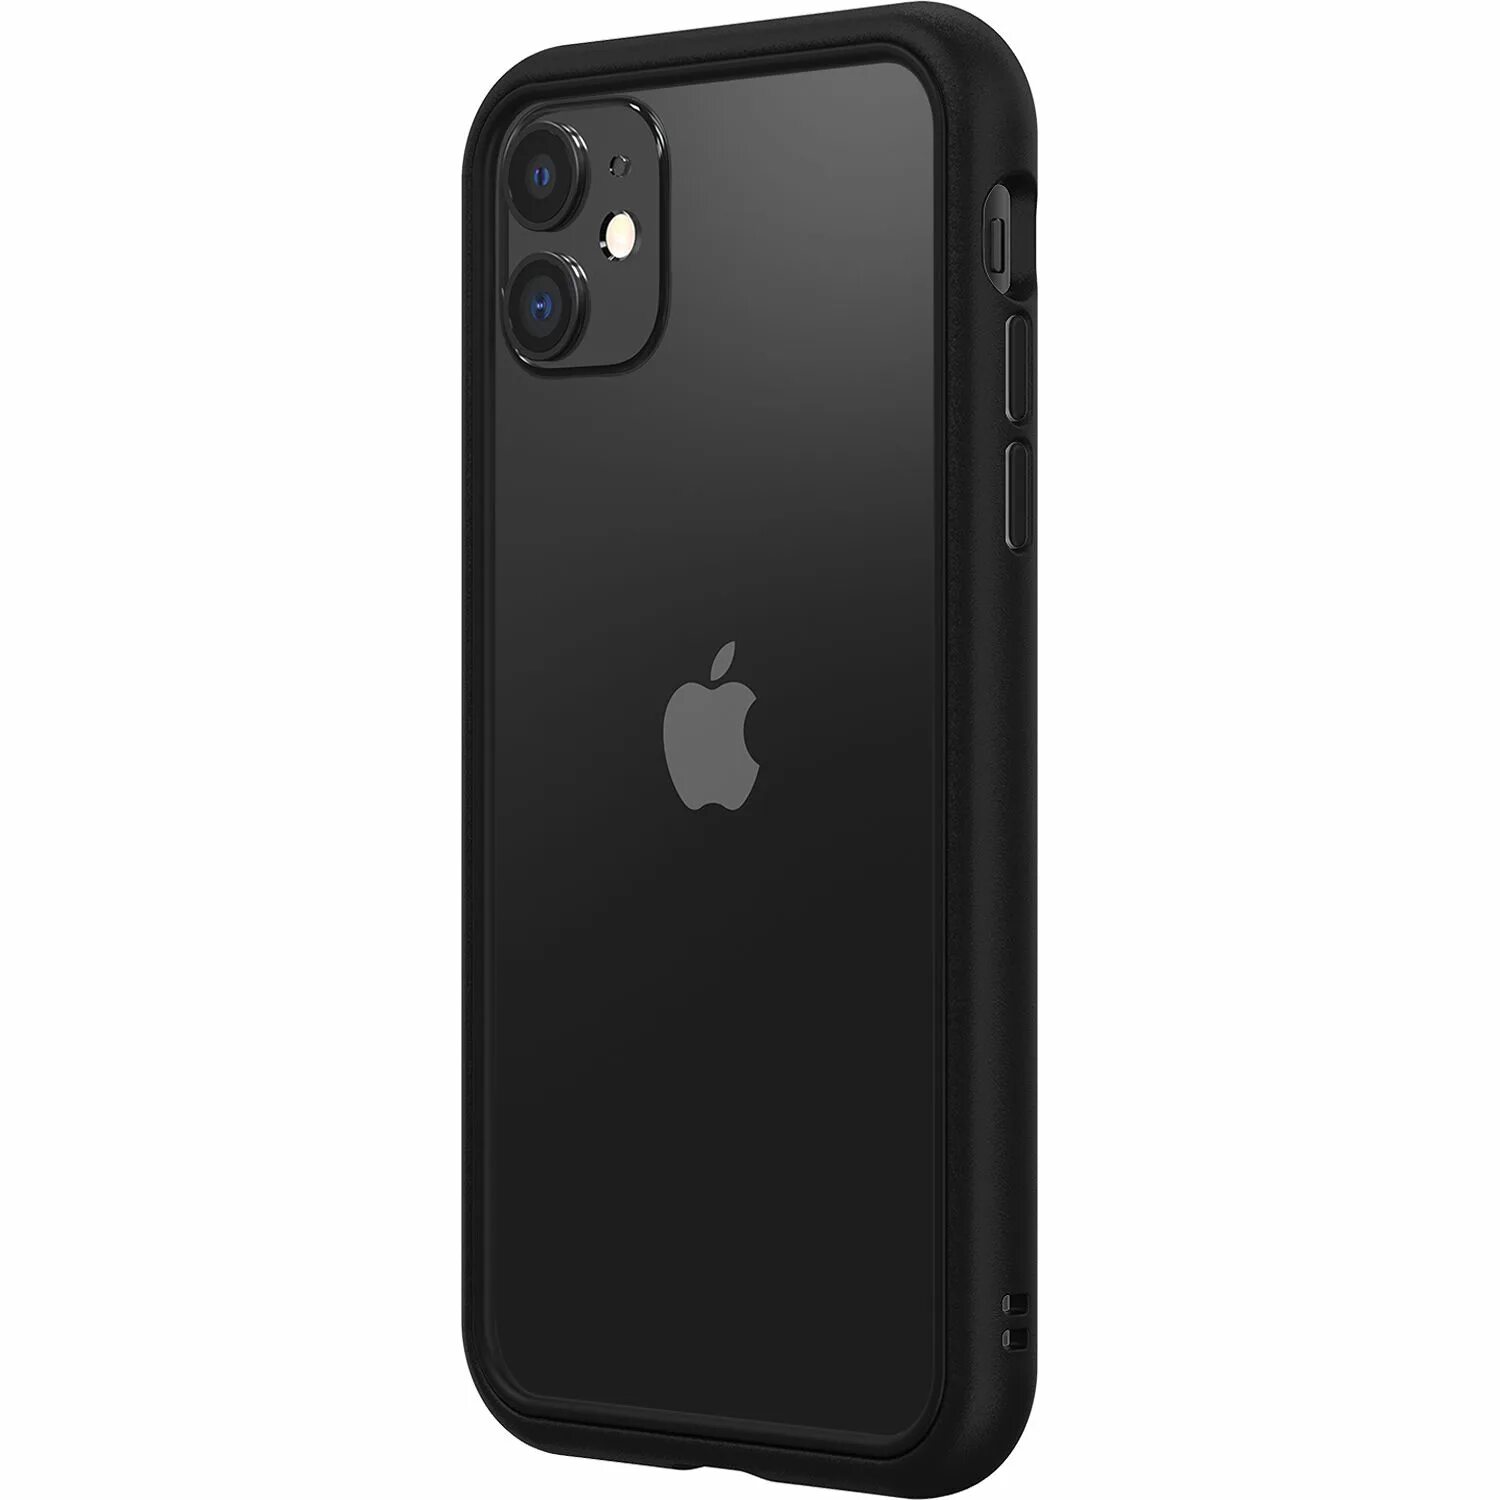 Iphone 11 черный. Айфон XR Black in Case. Айфон 11 черный болты. Zagg iphone 11.